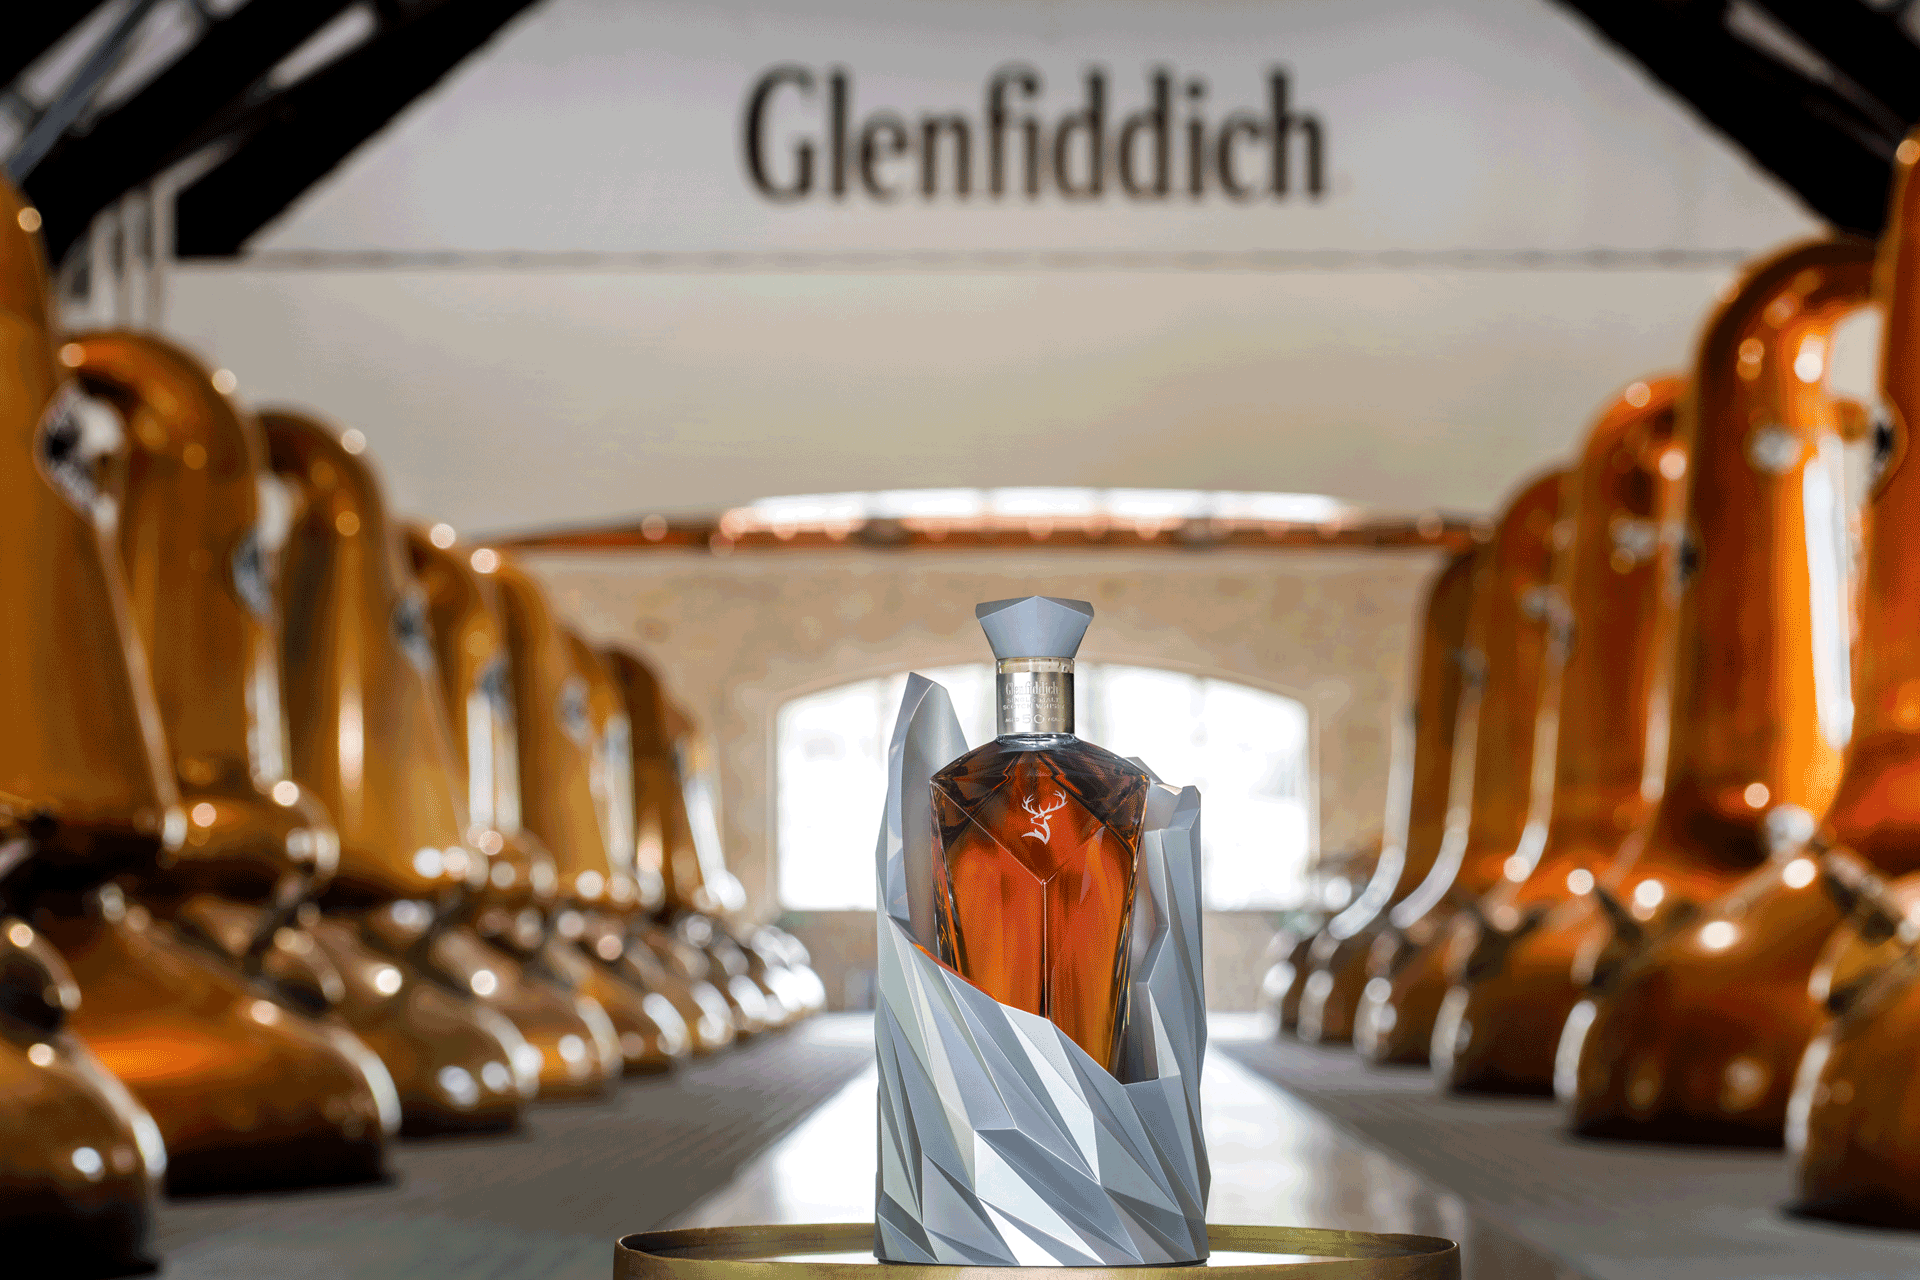 Bottle of Glenfiddich whisky in the Glenfiddich distillery.